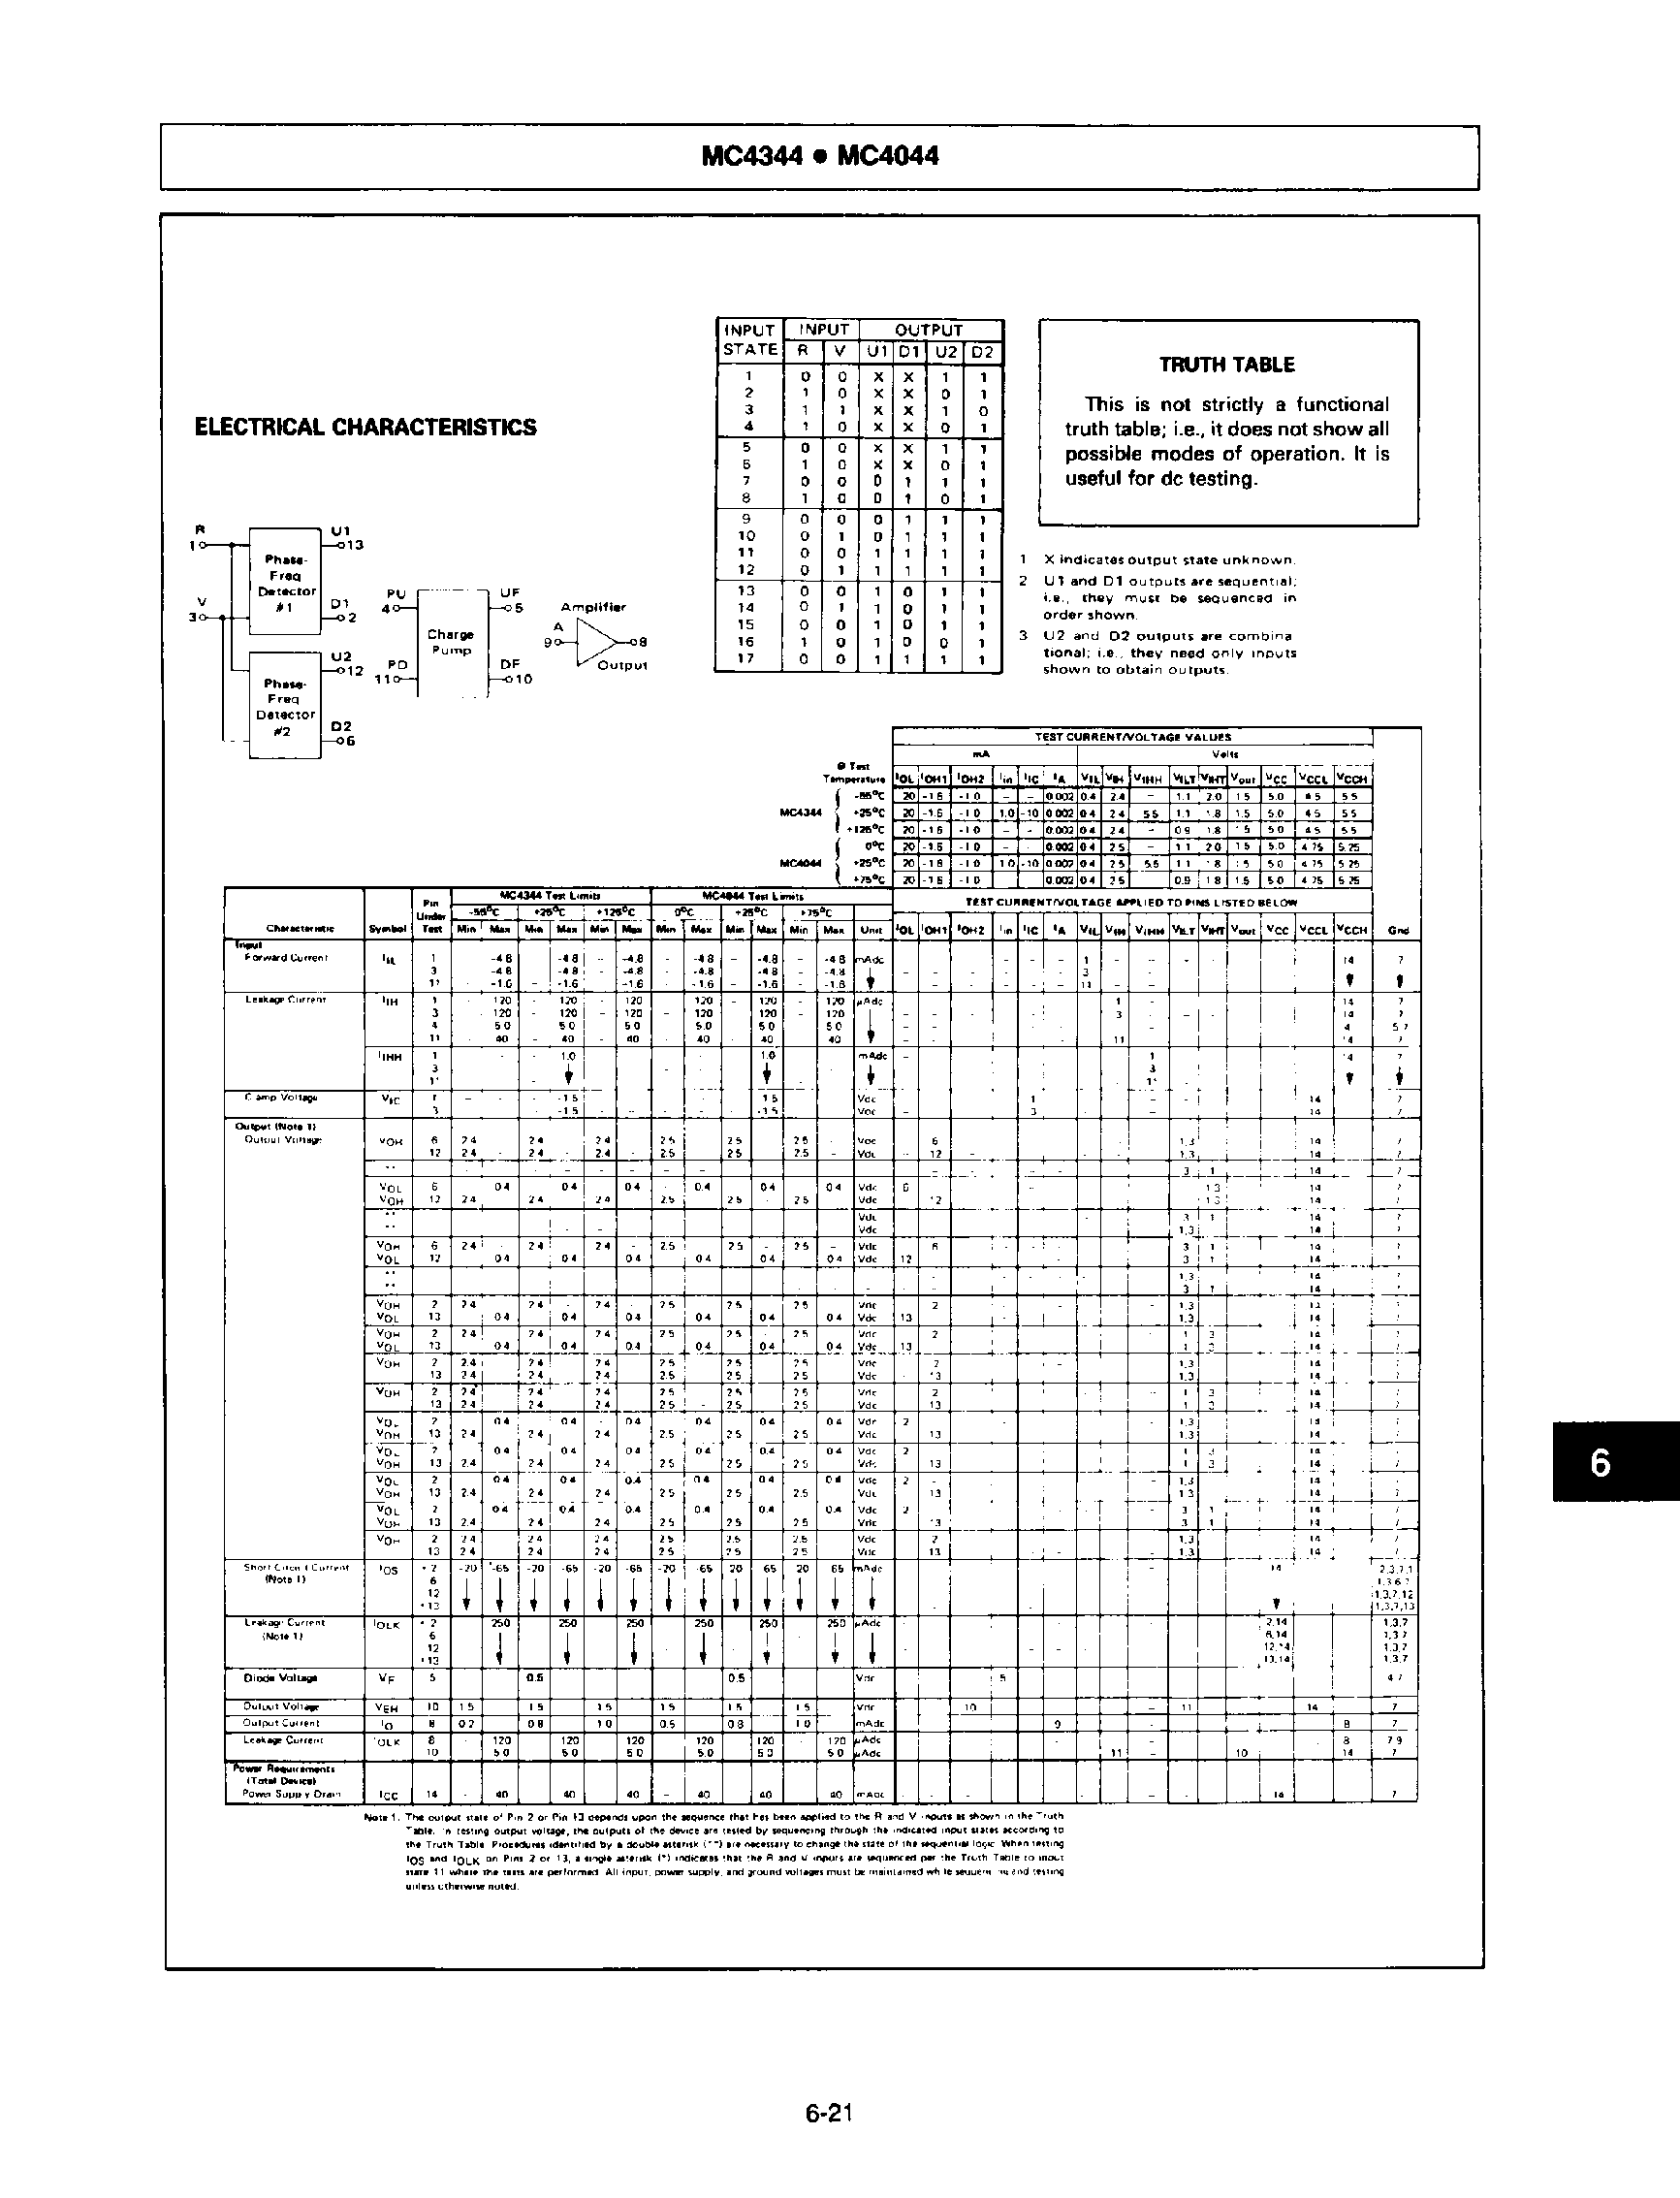 Datasheet MC4044 - (MC4344 / MC4044) Phase Frequency Detector page 2